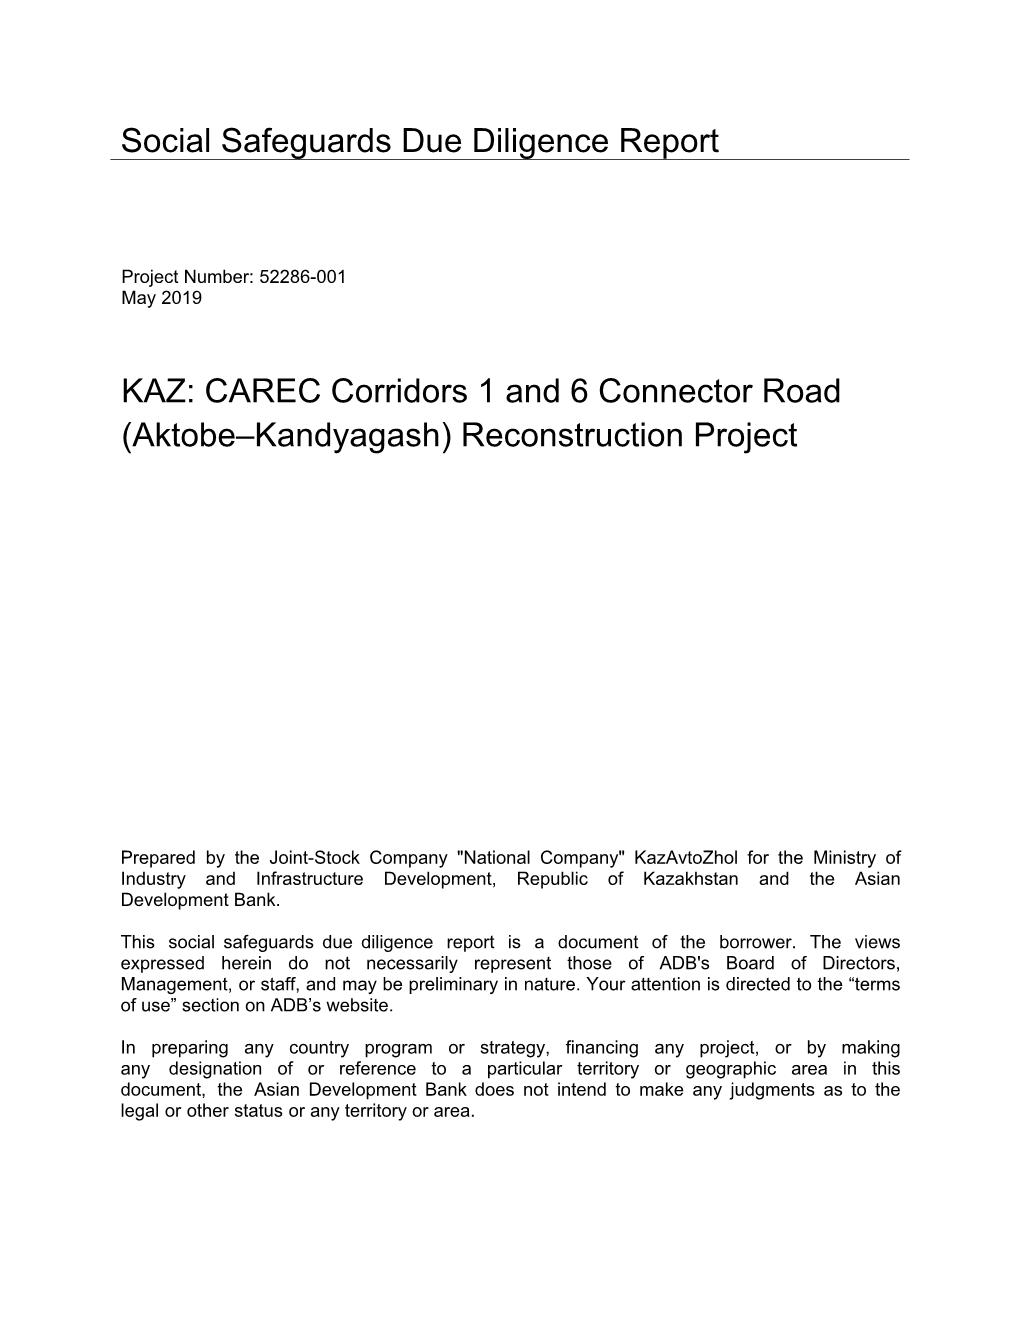 52286-001: CAREC Corridors 1 and 6 Connector Road (Aktobe